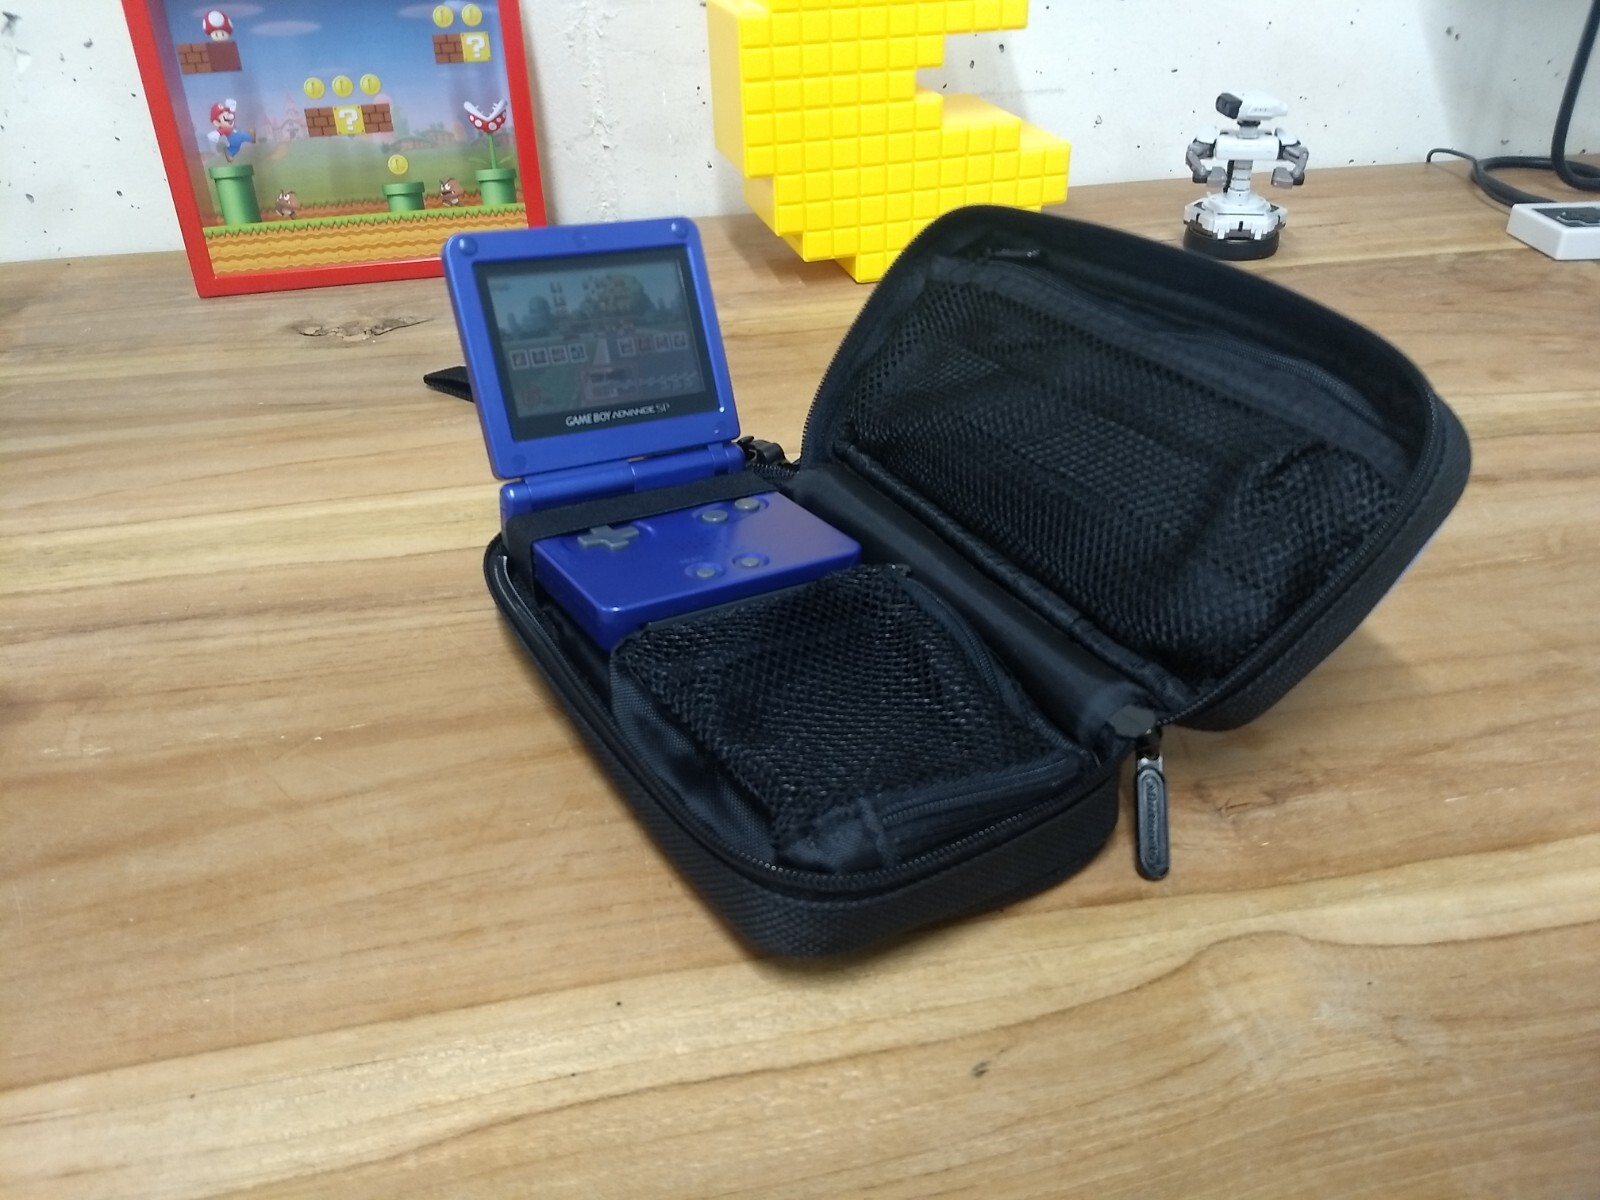 Nintendo gameboy Advance SP Bag - Gameboy Advance Hardware - 2